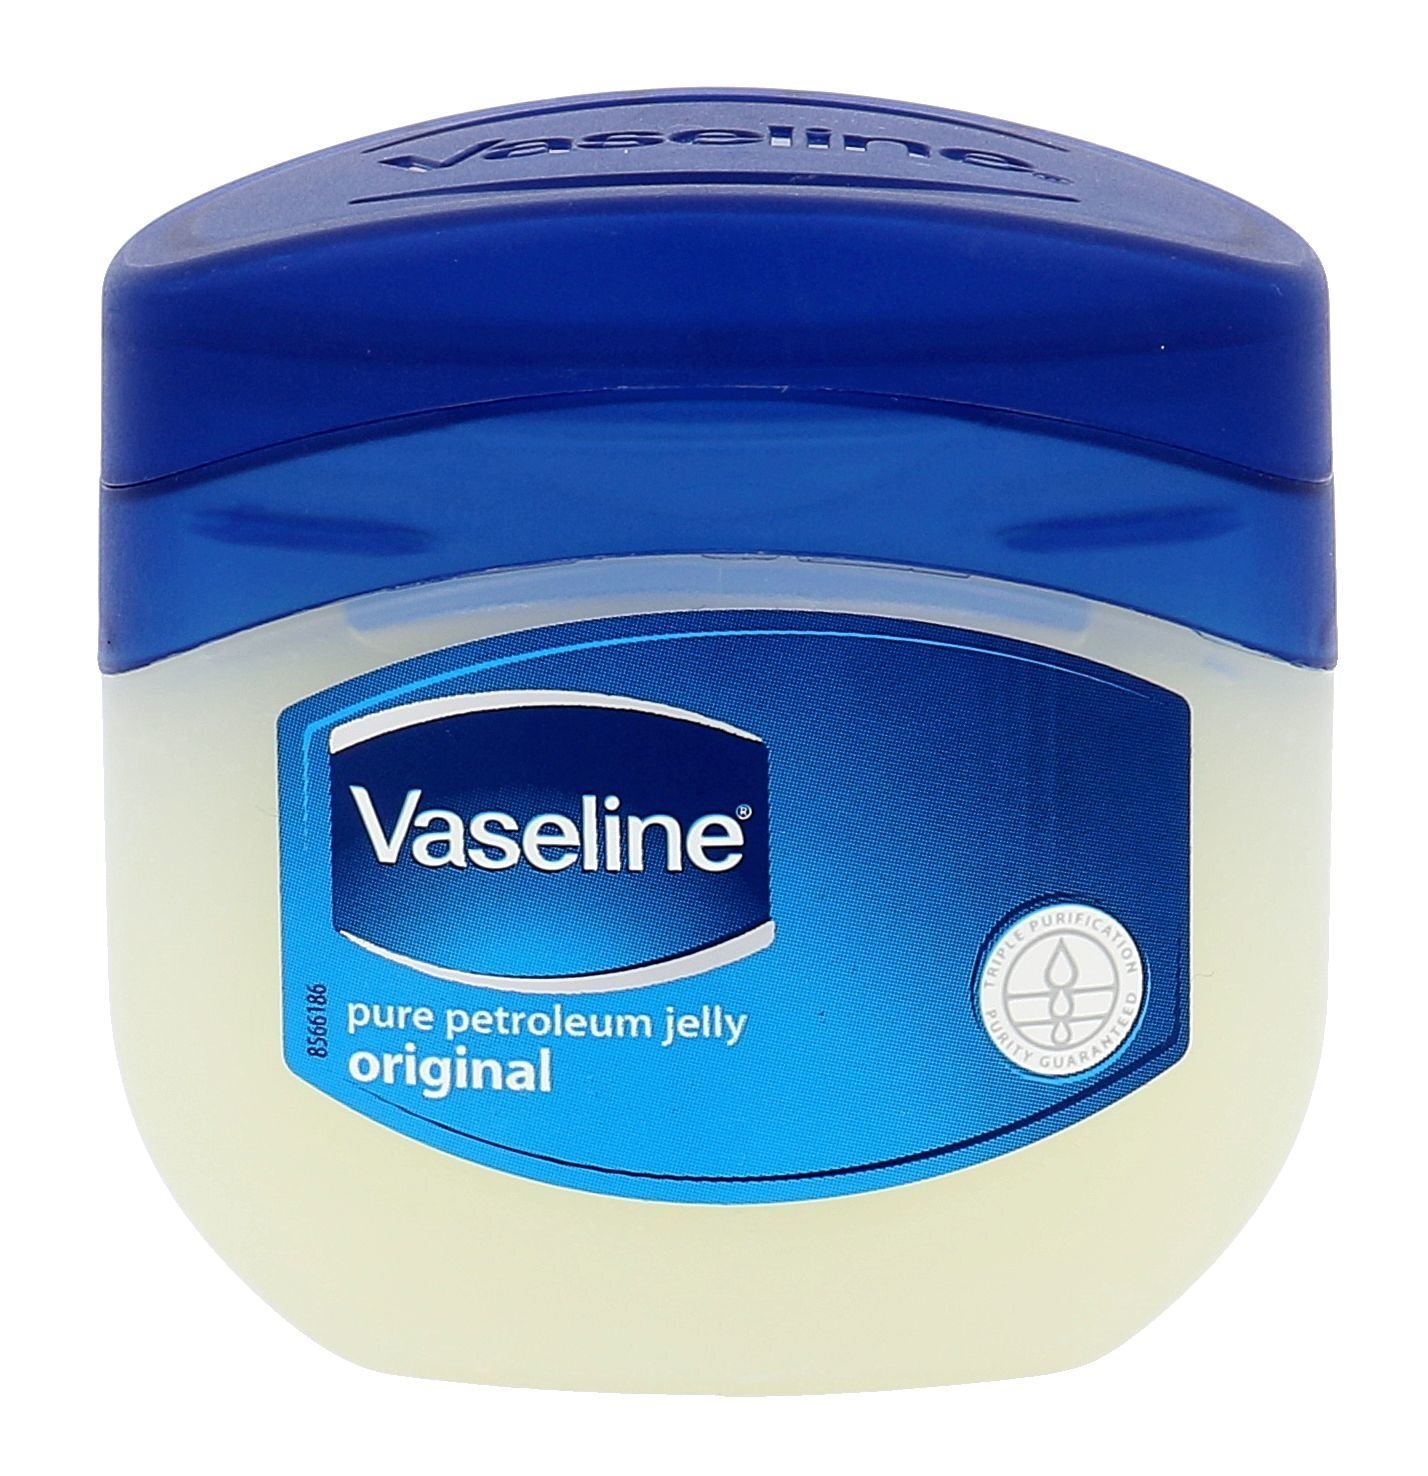 Lūpų balzamas Vaseline Original, 50 ml kaina | pigu.lt